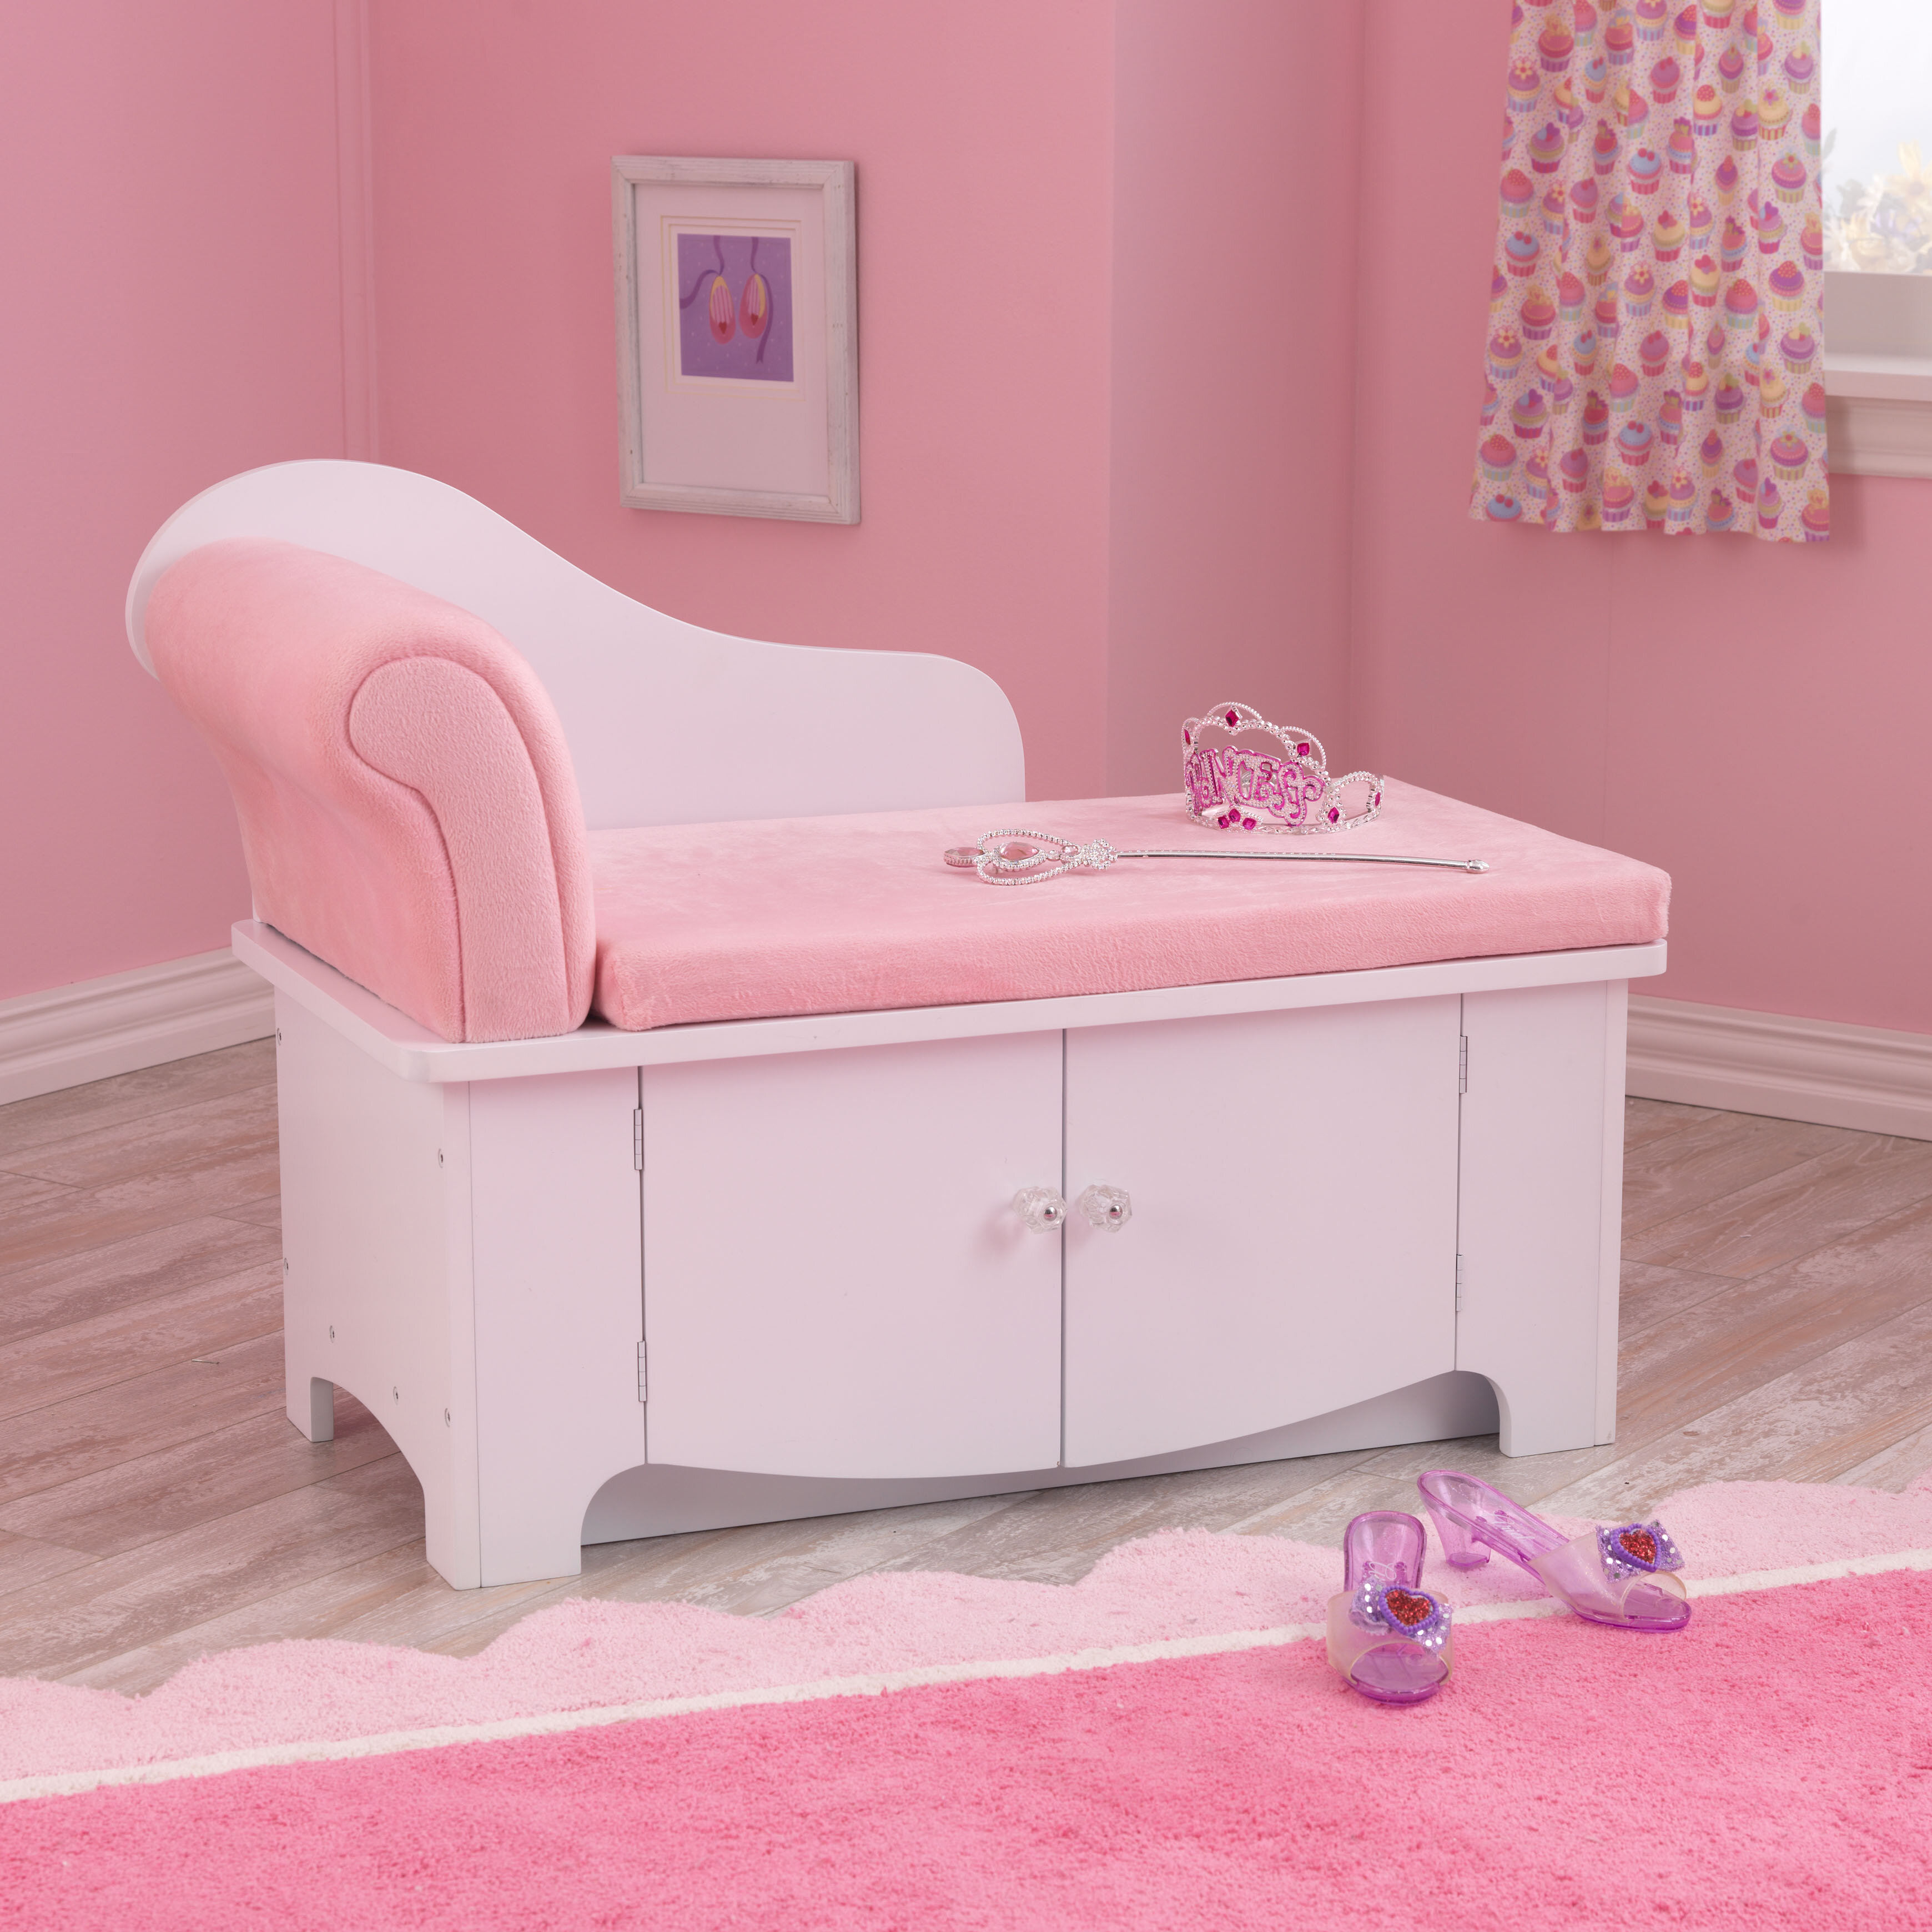 Girl Room Furniture Princess Storage Bench w Cushion Kid Bedroom Playroom Decor 